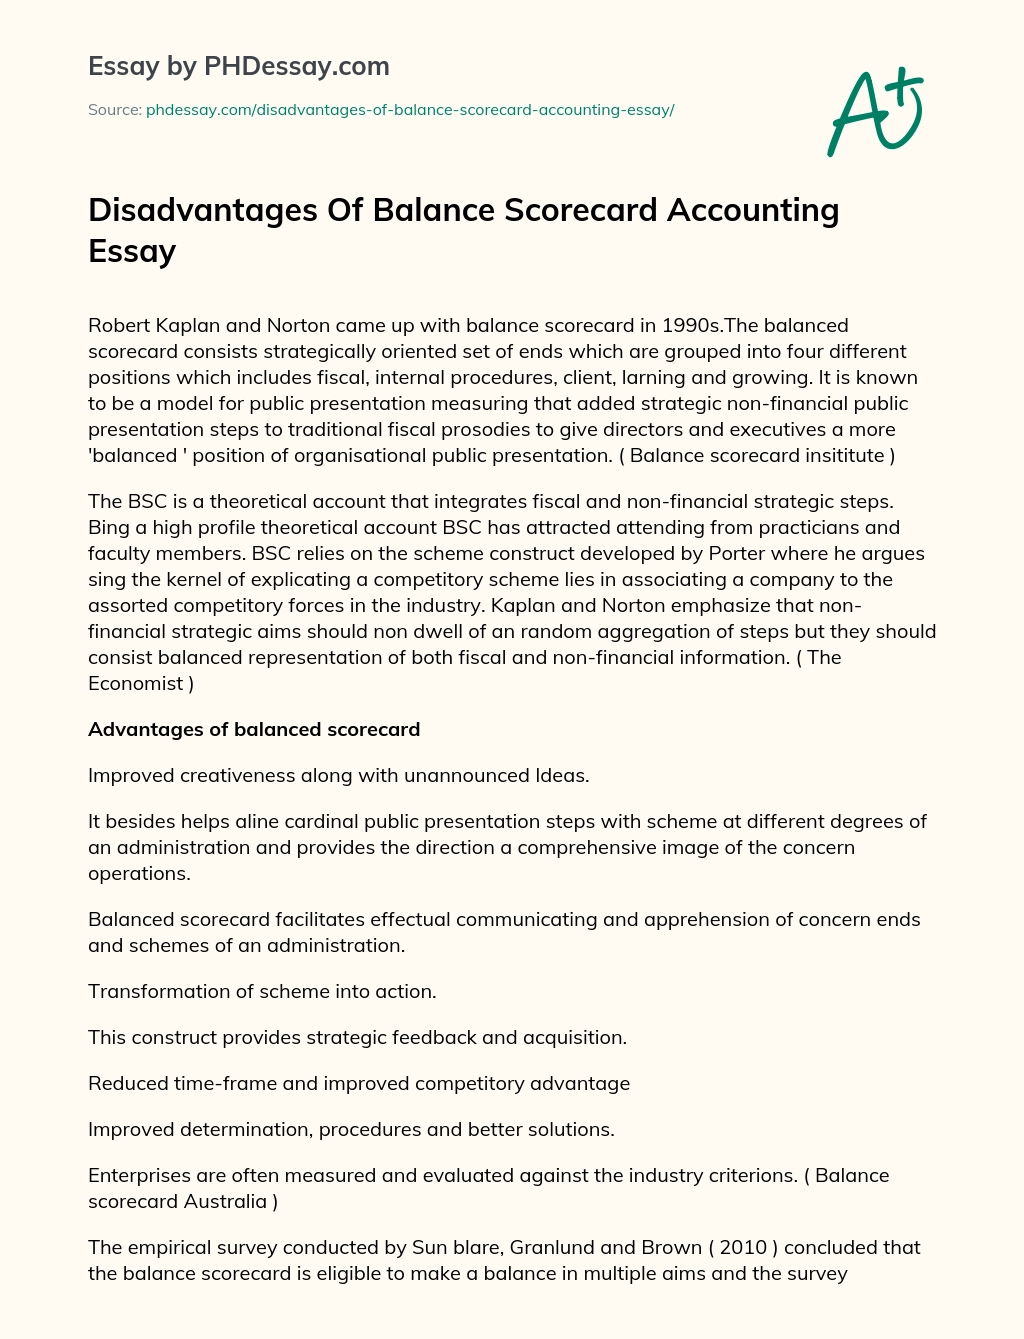 Disadvantages Of Balance Scorecard Accounting Essay essay